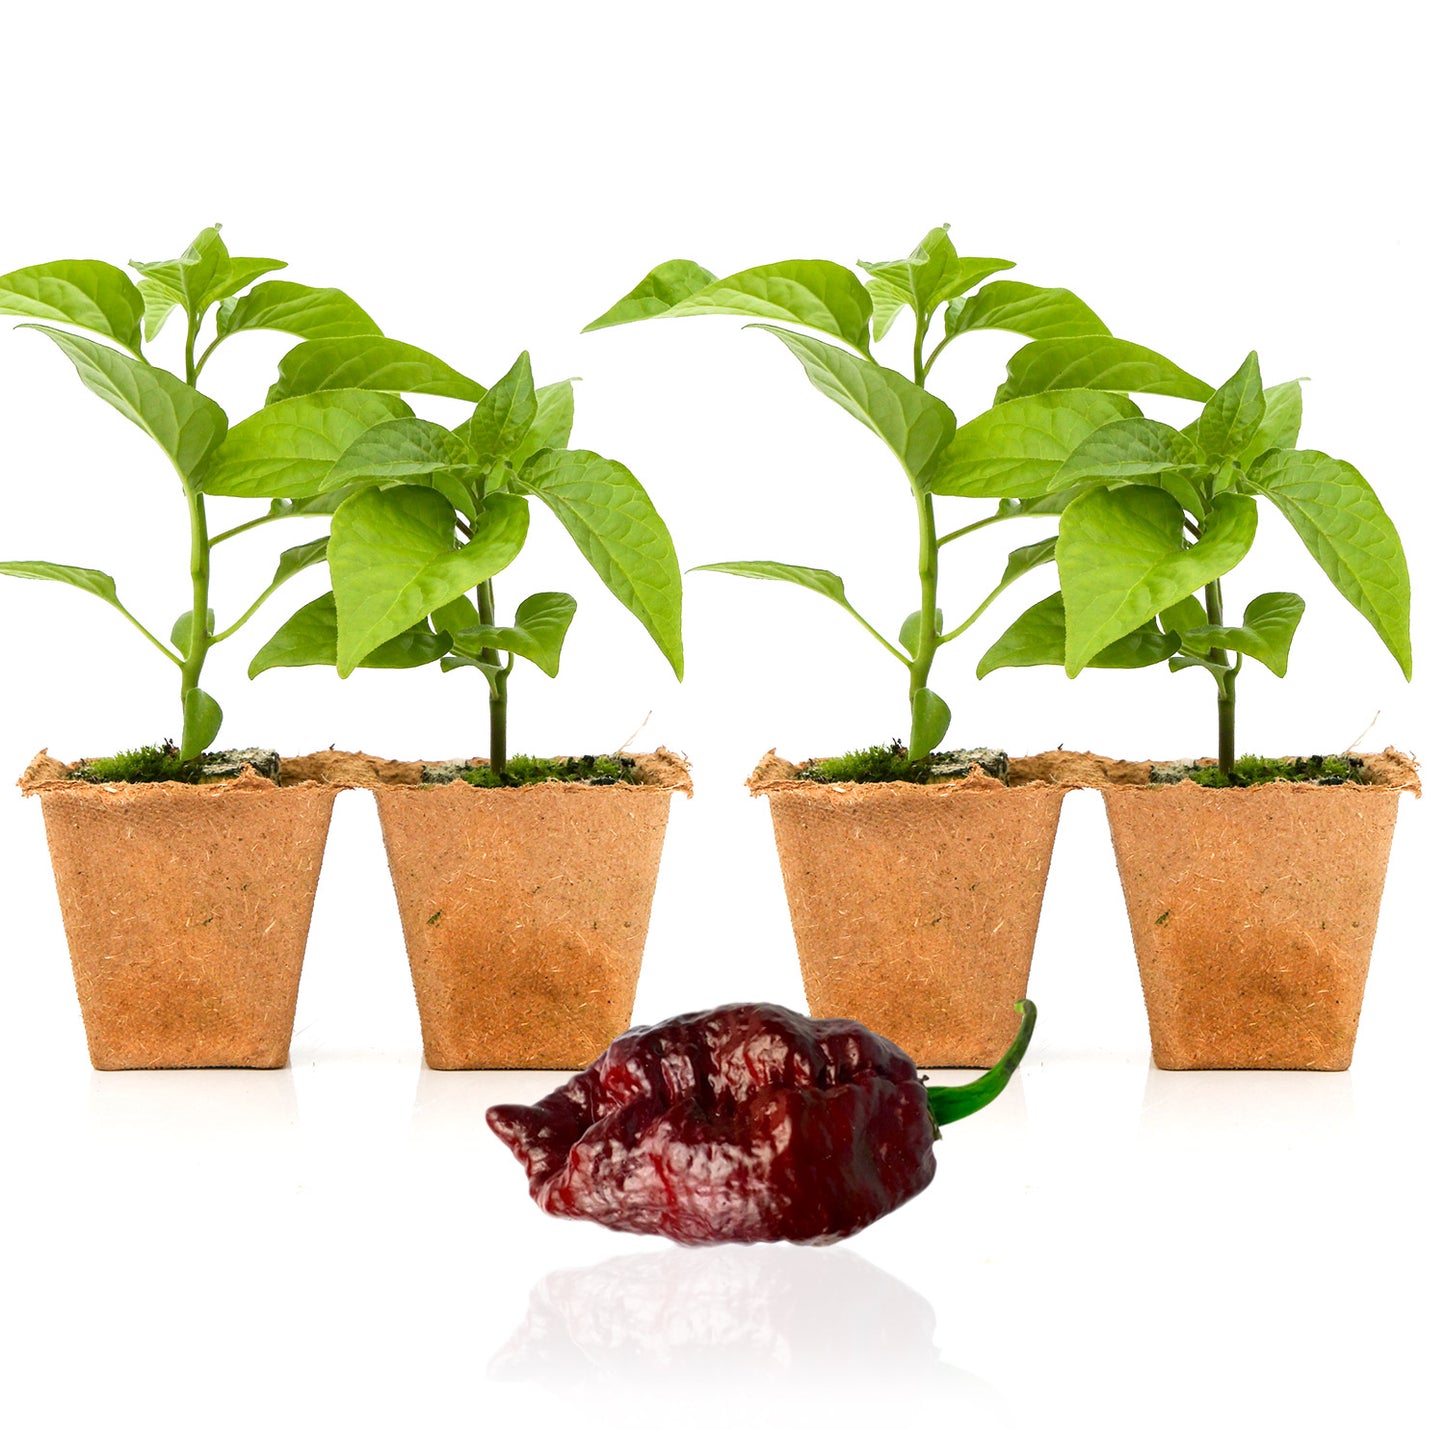 Pepper Joe's Chocolate Bhutlah plants for sale